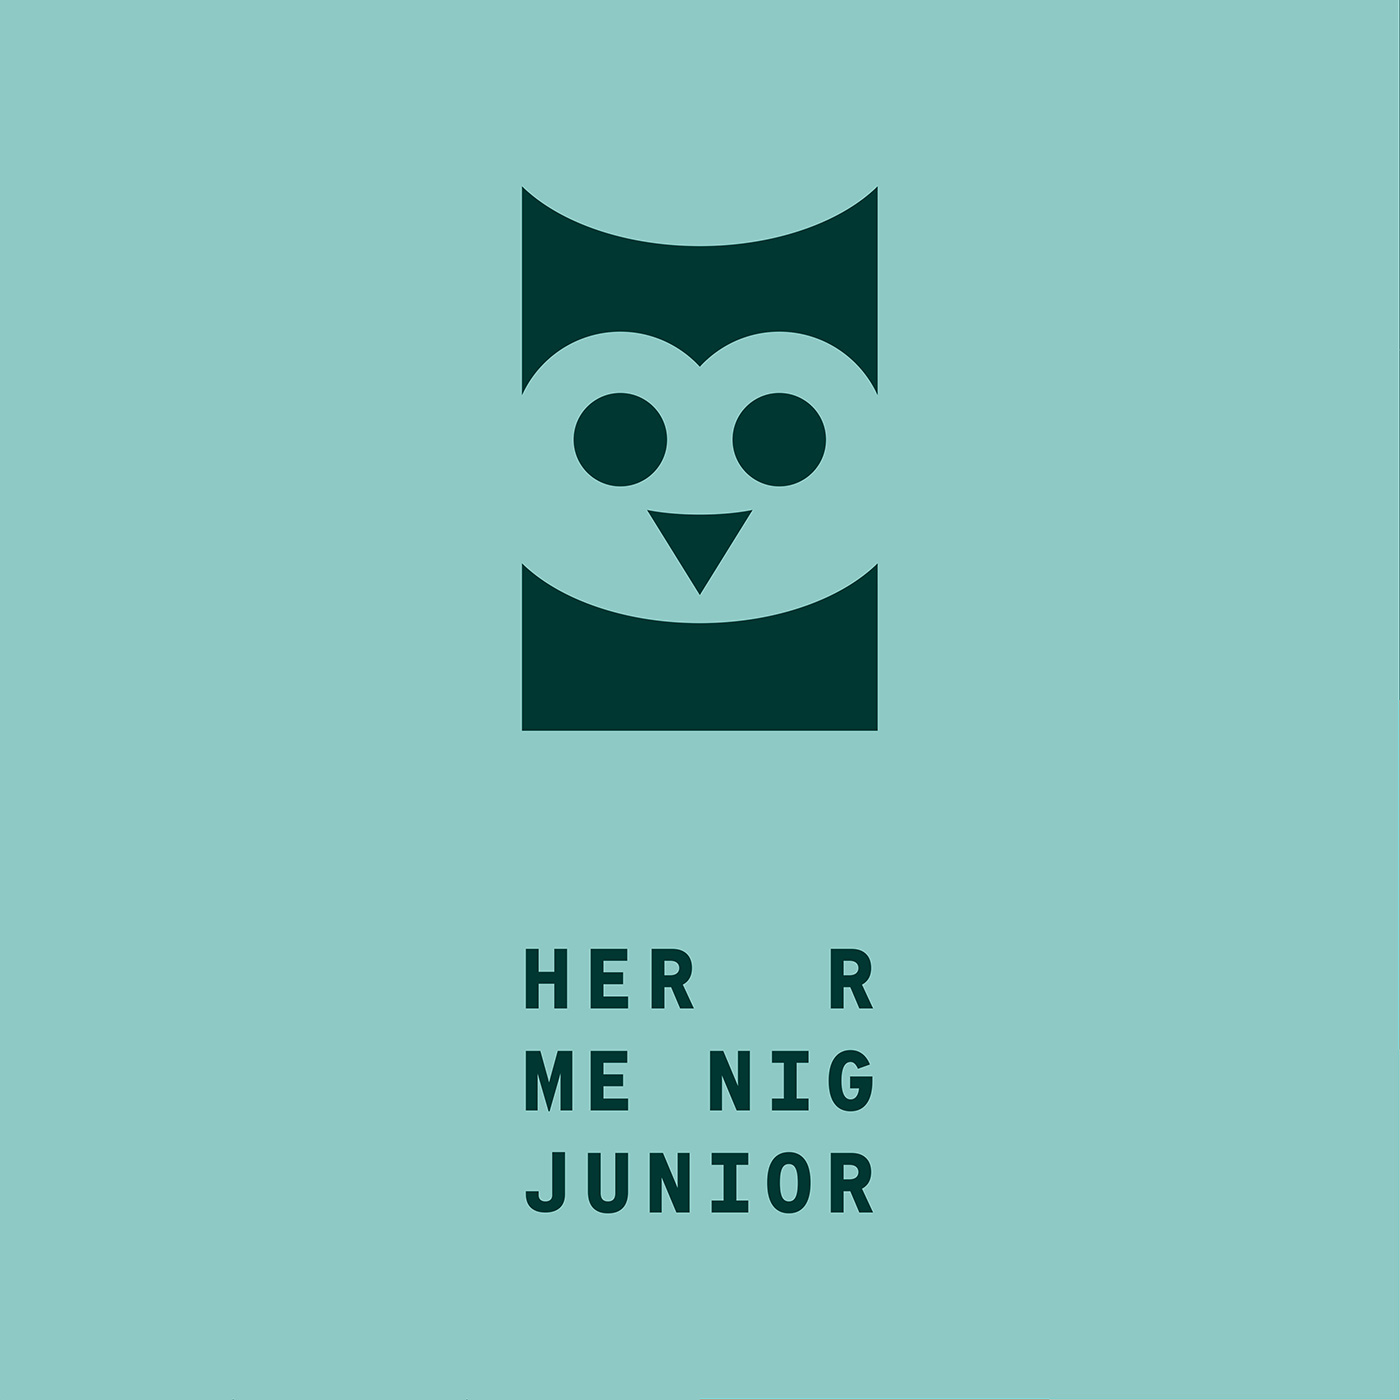 Herr Menig Junior儿童验光服务机构品牌设计